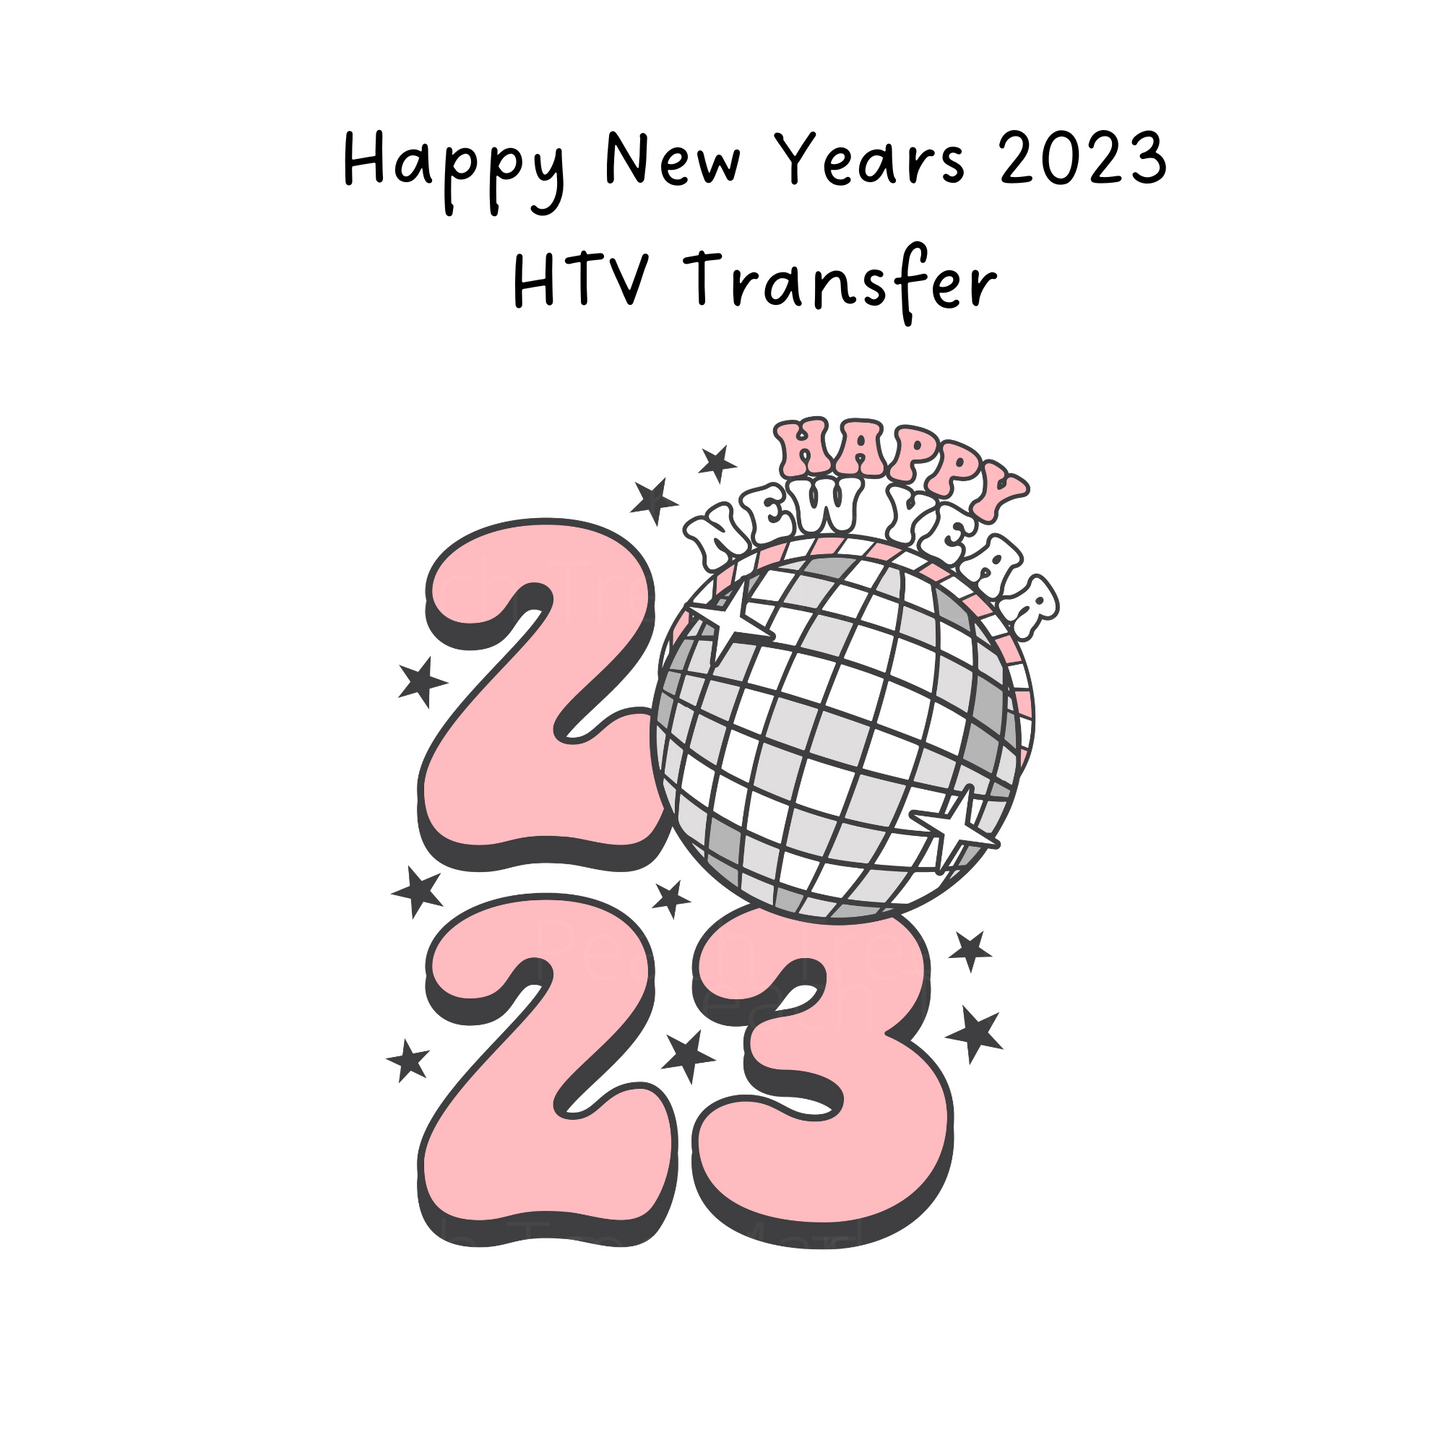 Happy New Years 2023 HTV Transfer